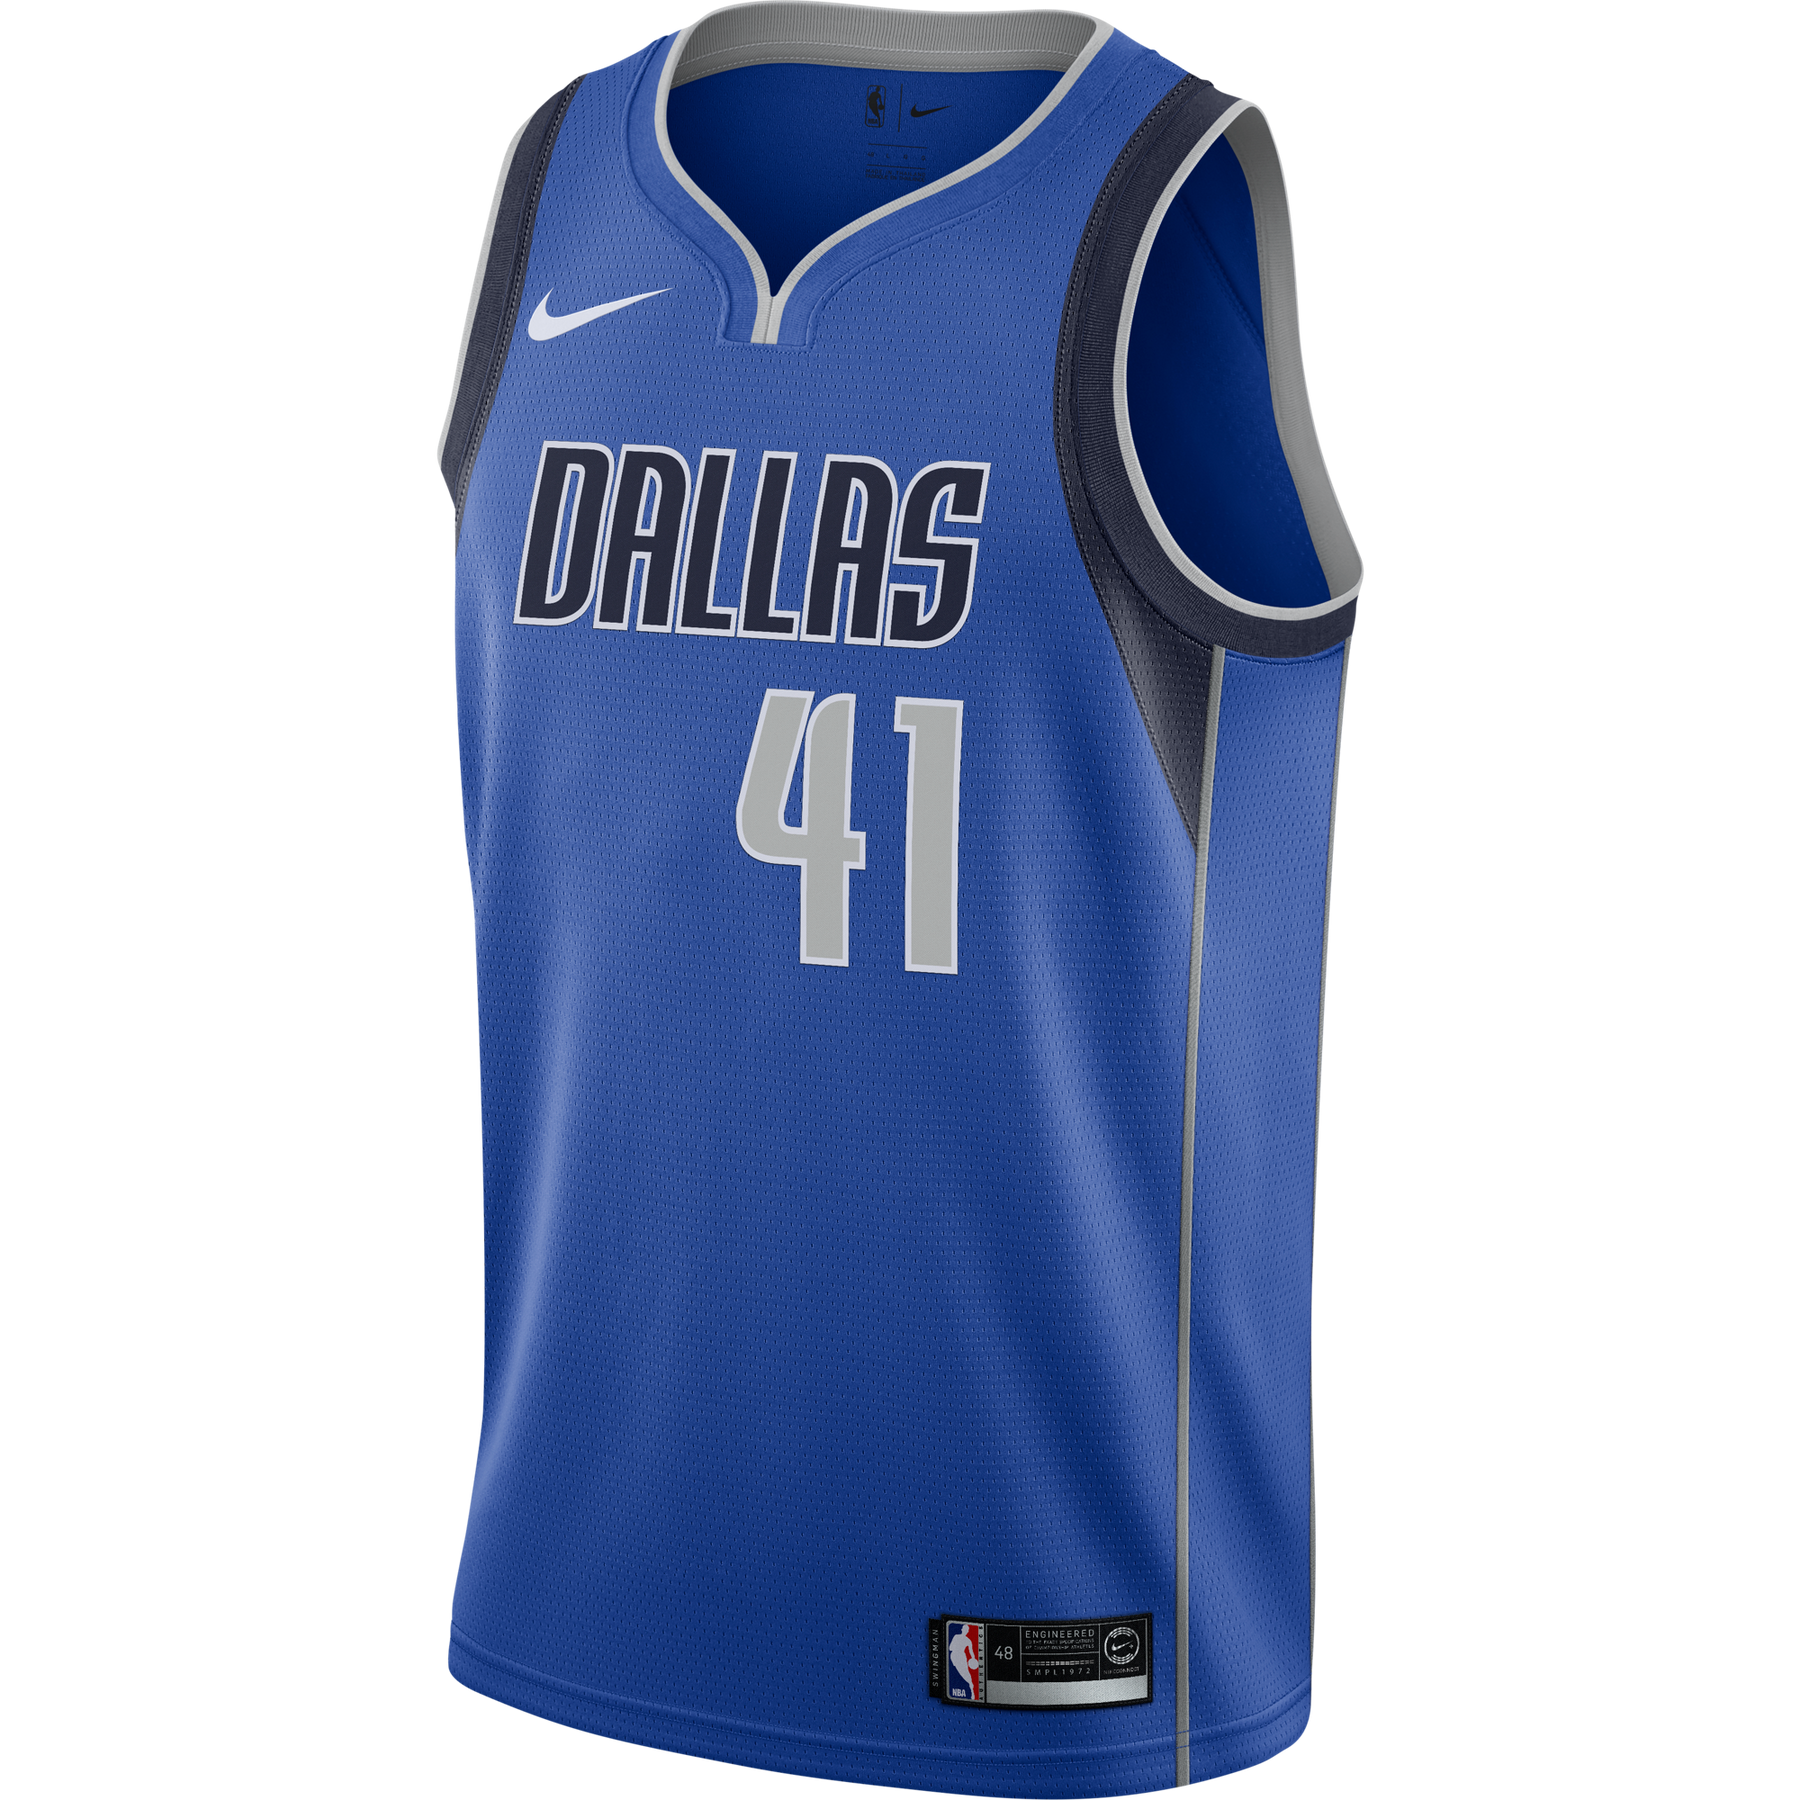 Dallas Mavericks jersey Dirk Nowitzki basketball NBA shirt size S